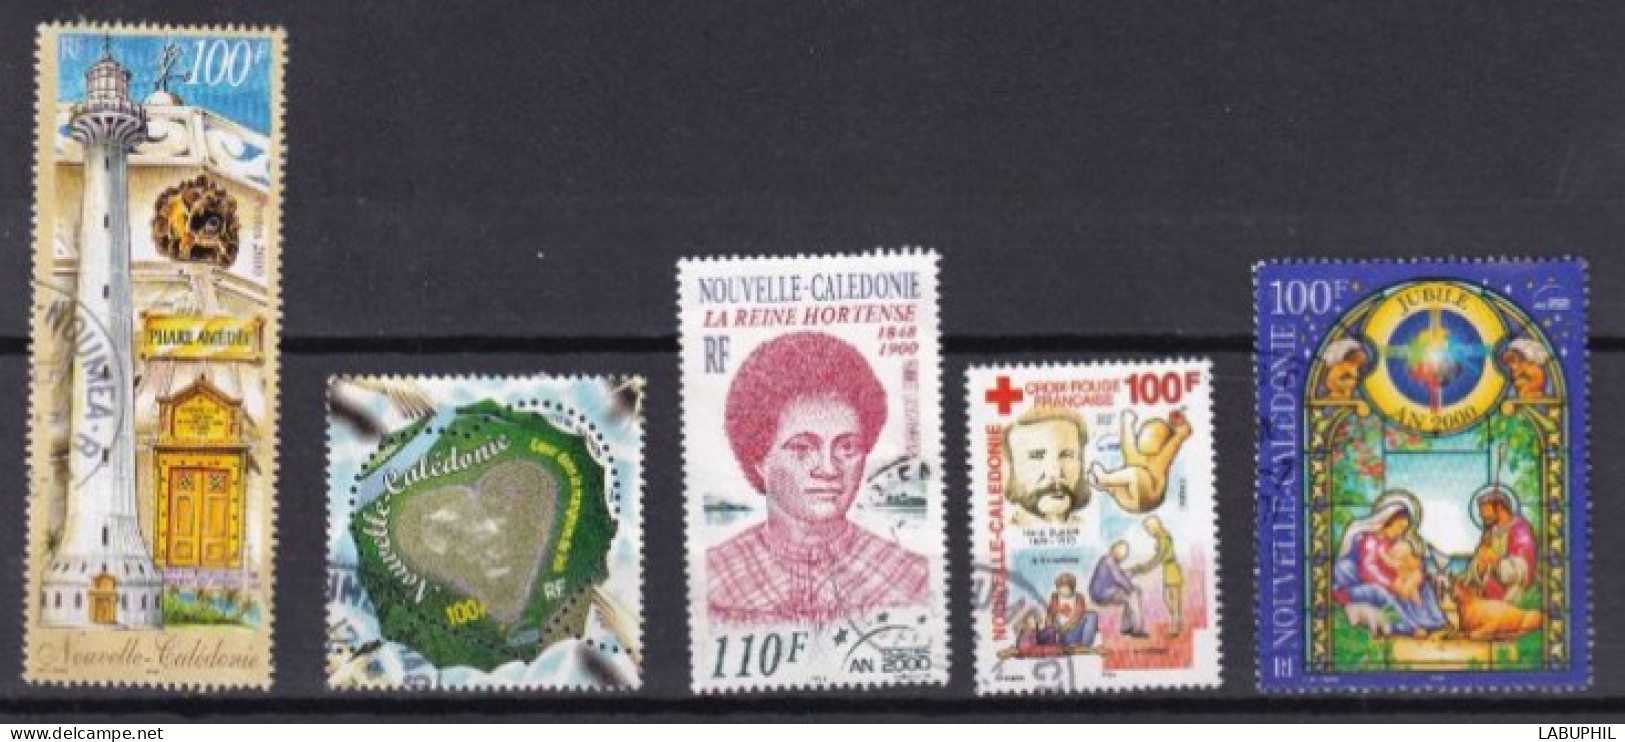 NOUVELLE CALEDONIE Dispersion D'une Collection Oblitéré Used  2000 Petit Lot Annee 2000 - Used Stamps